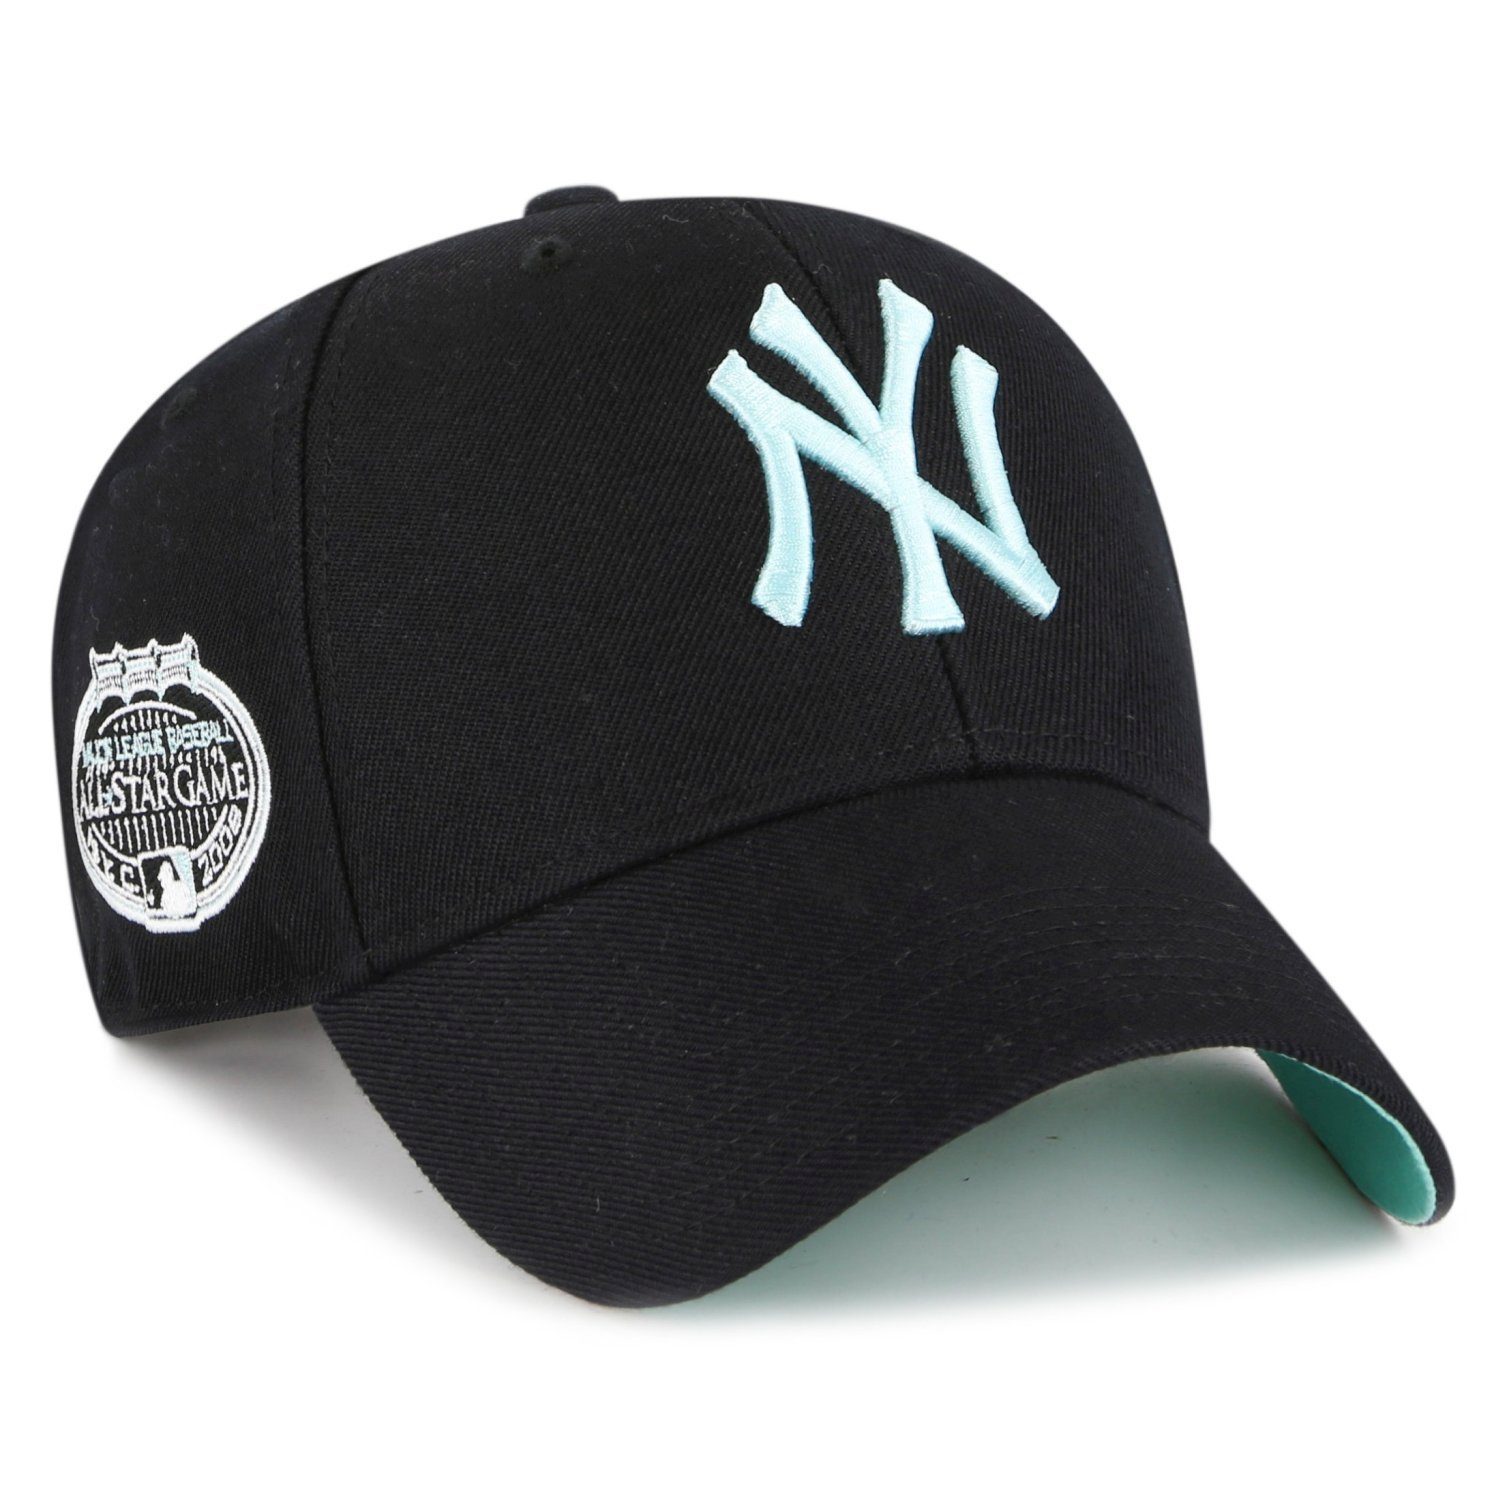 New Cap '47 ALL Snapback STAR GAME York Brand Yankees